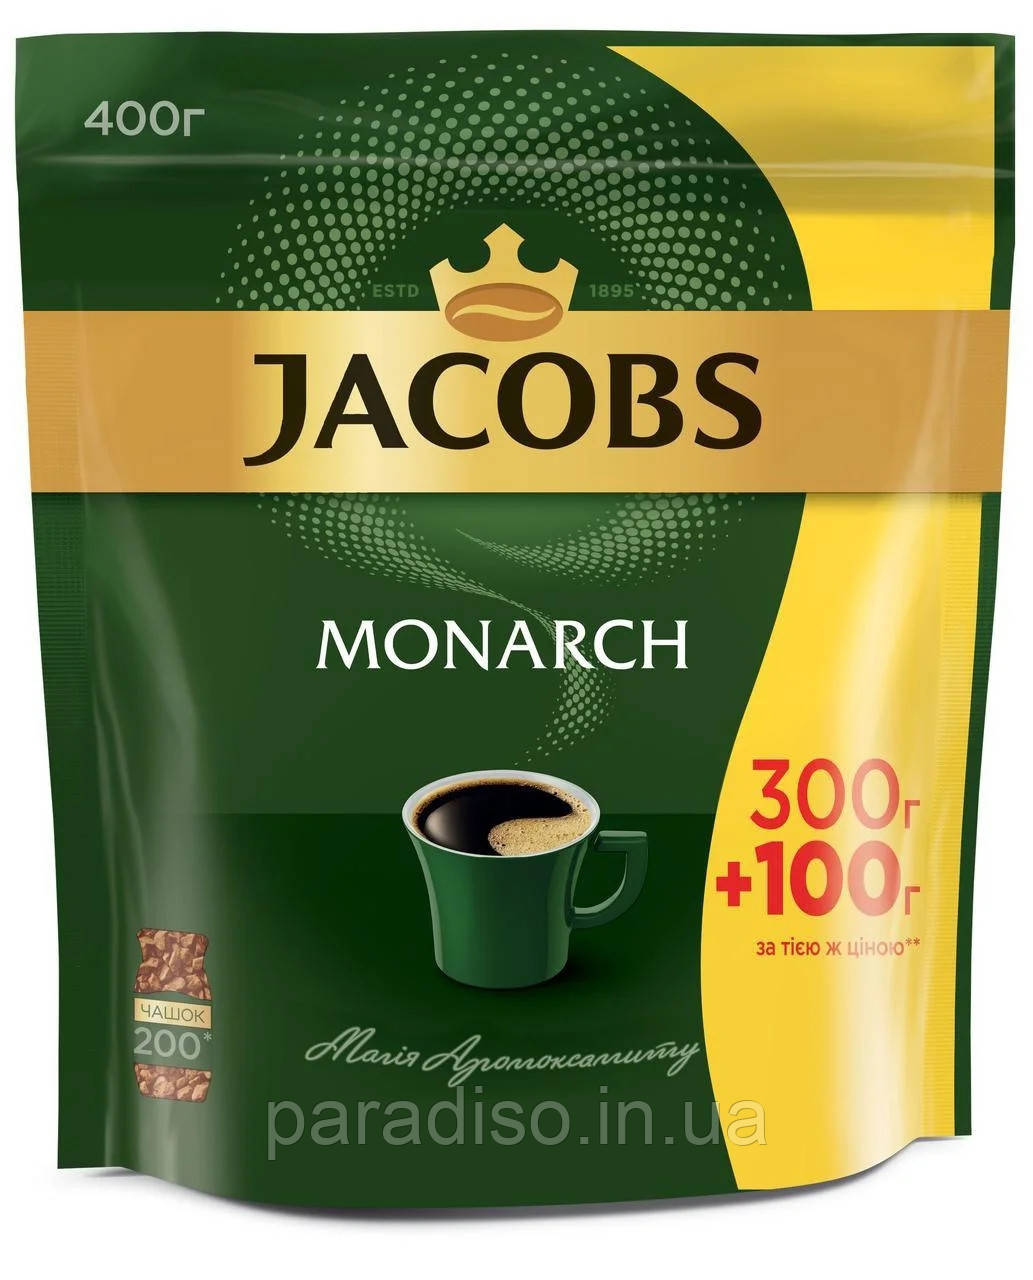 Розчинна кава JACOBS MONARCH Якобс Монарх 400 г (300+100)